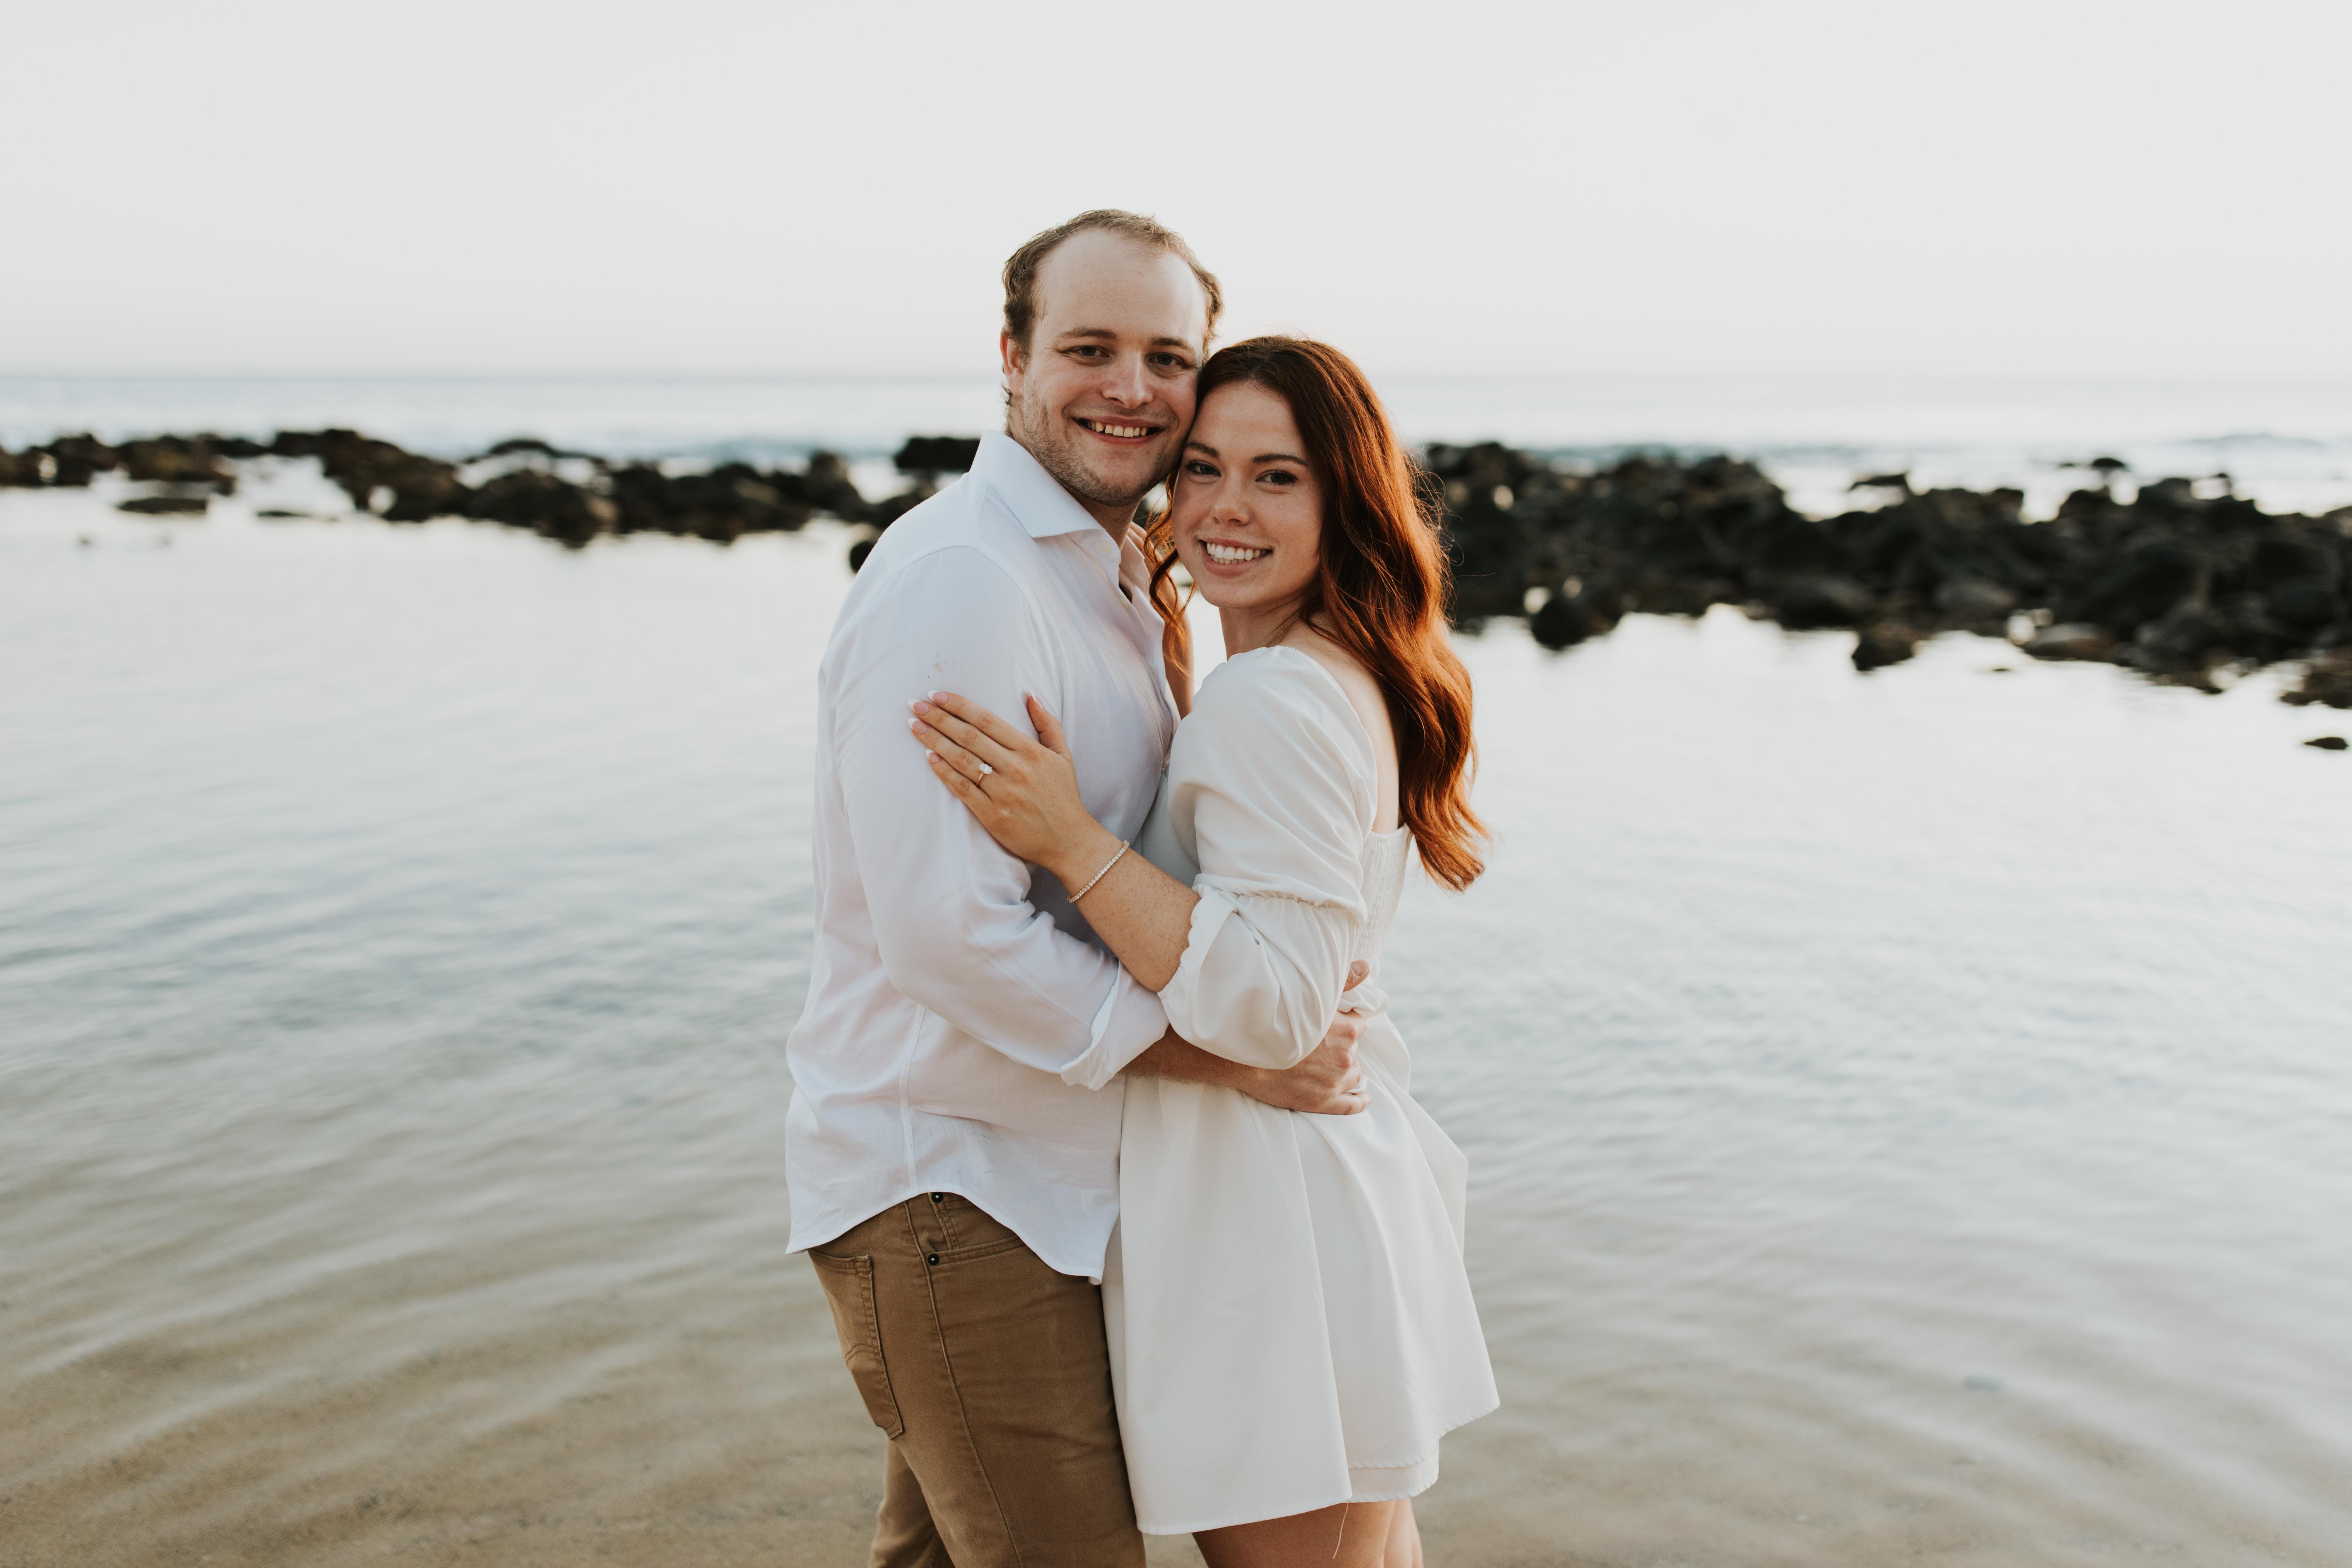 The Wedding Website of Natalie Durbin and Jason Hadaller